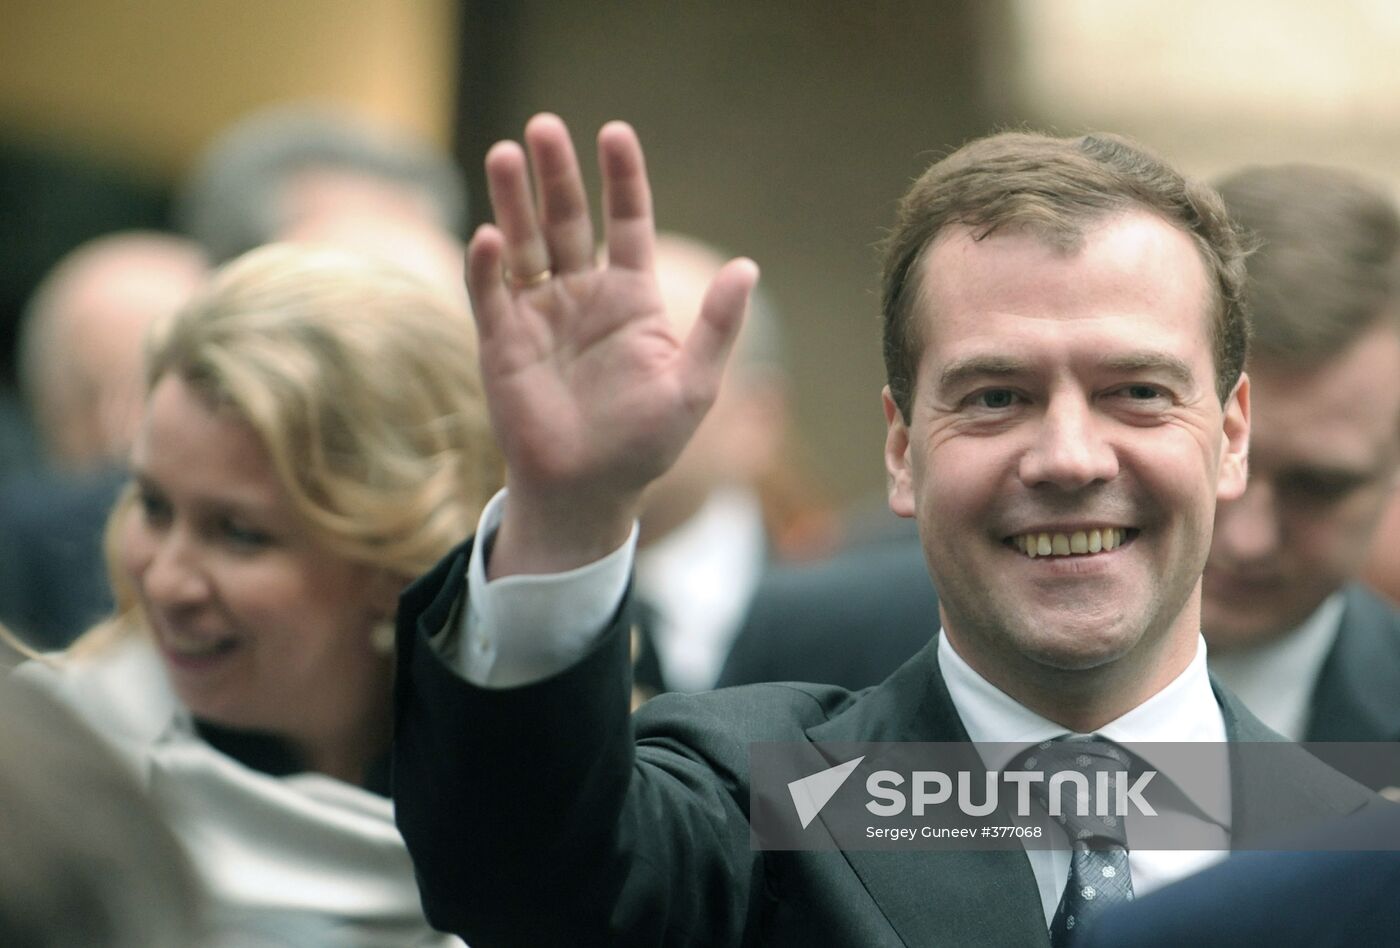 Russian President Dmitry Medvedev visiting Italy